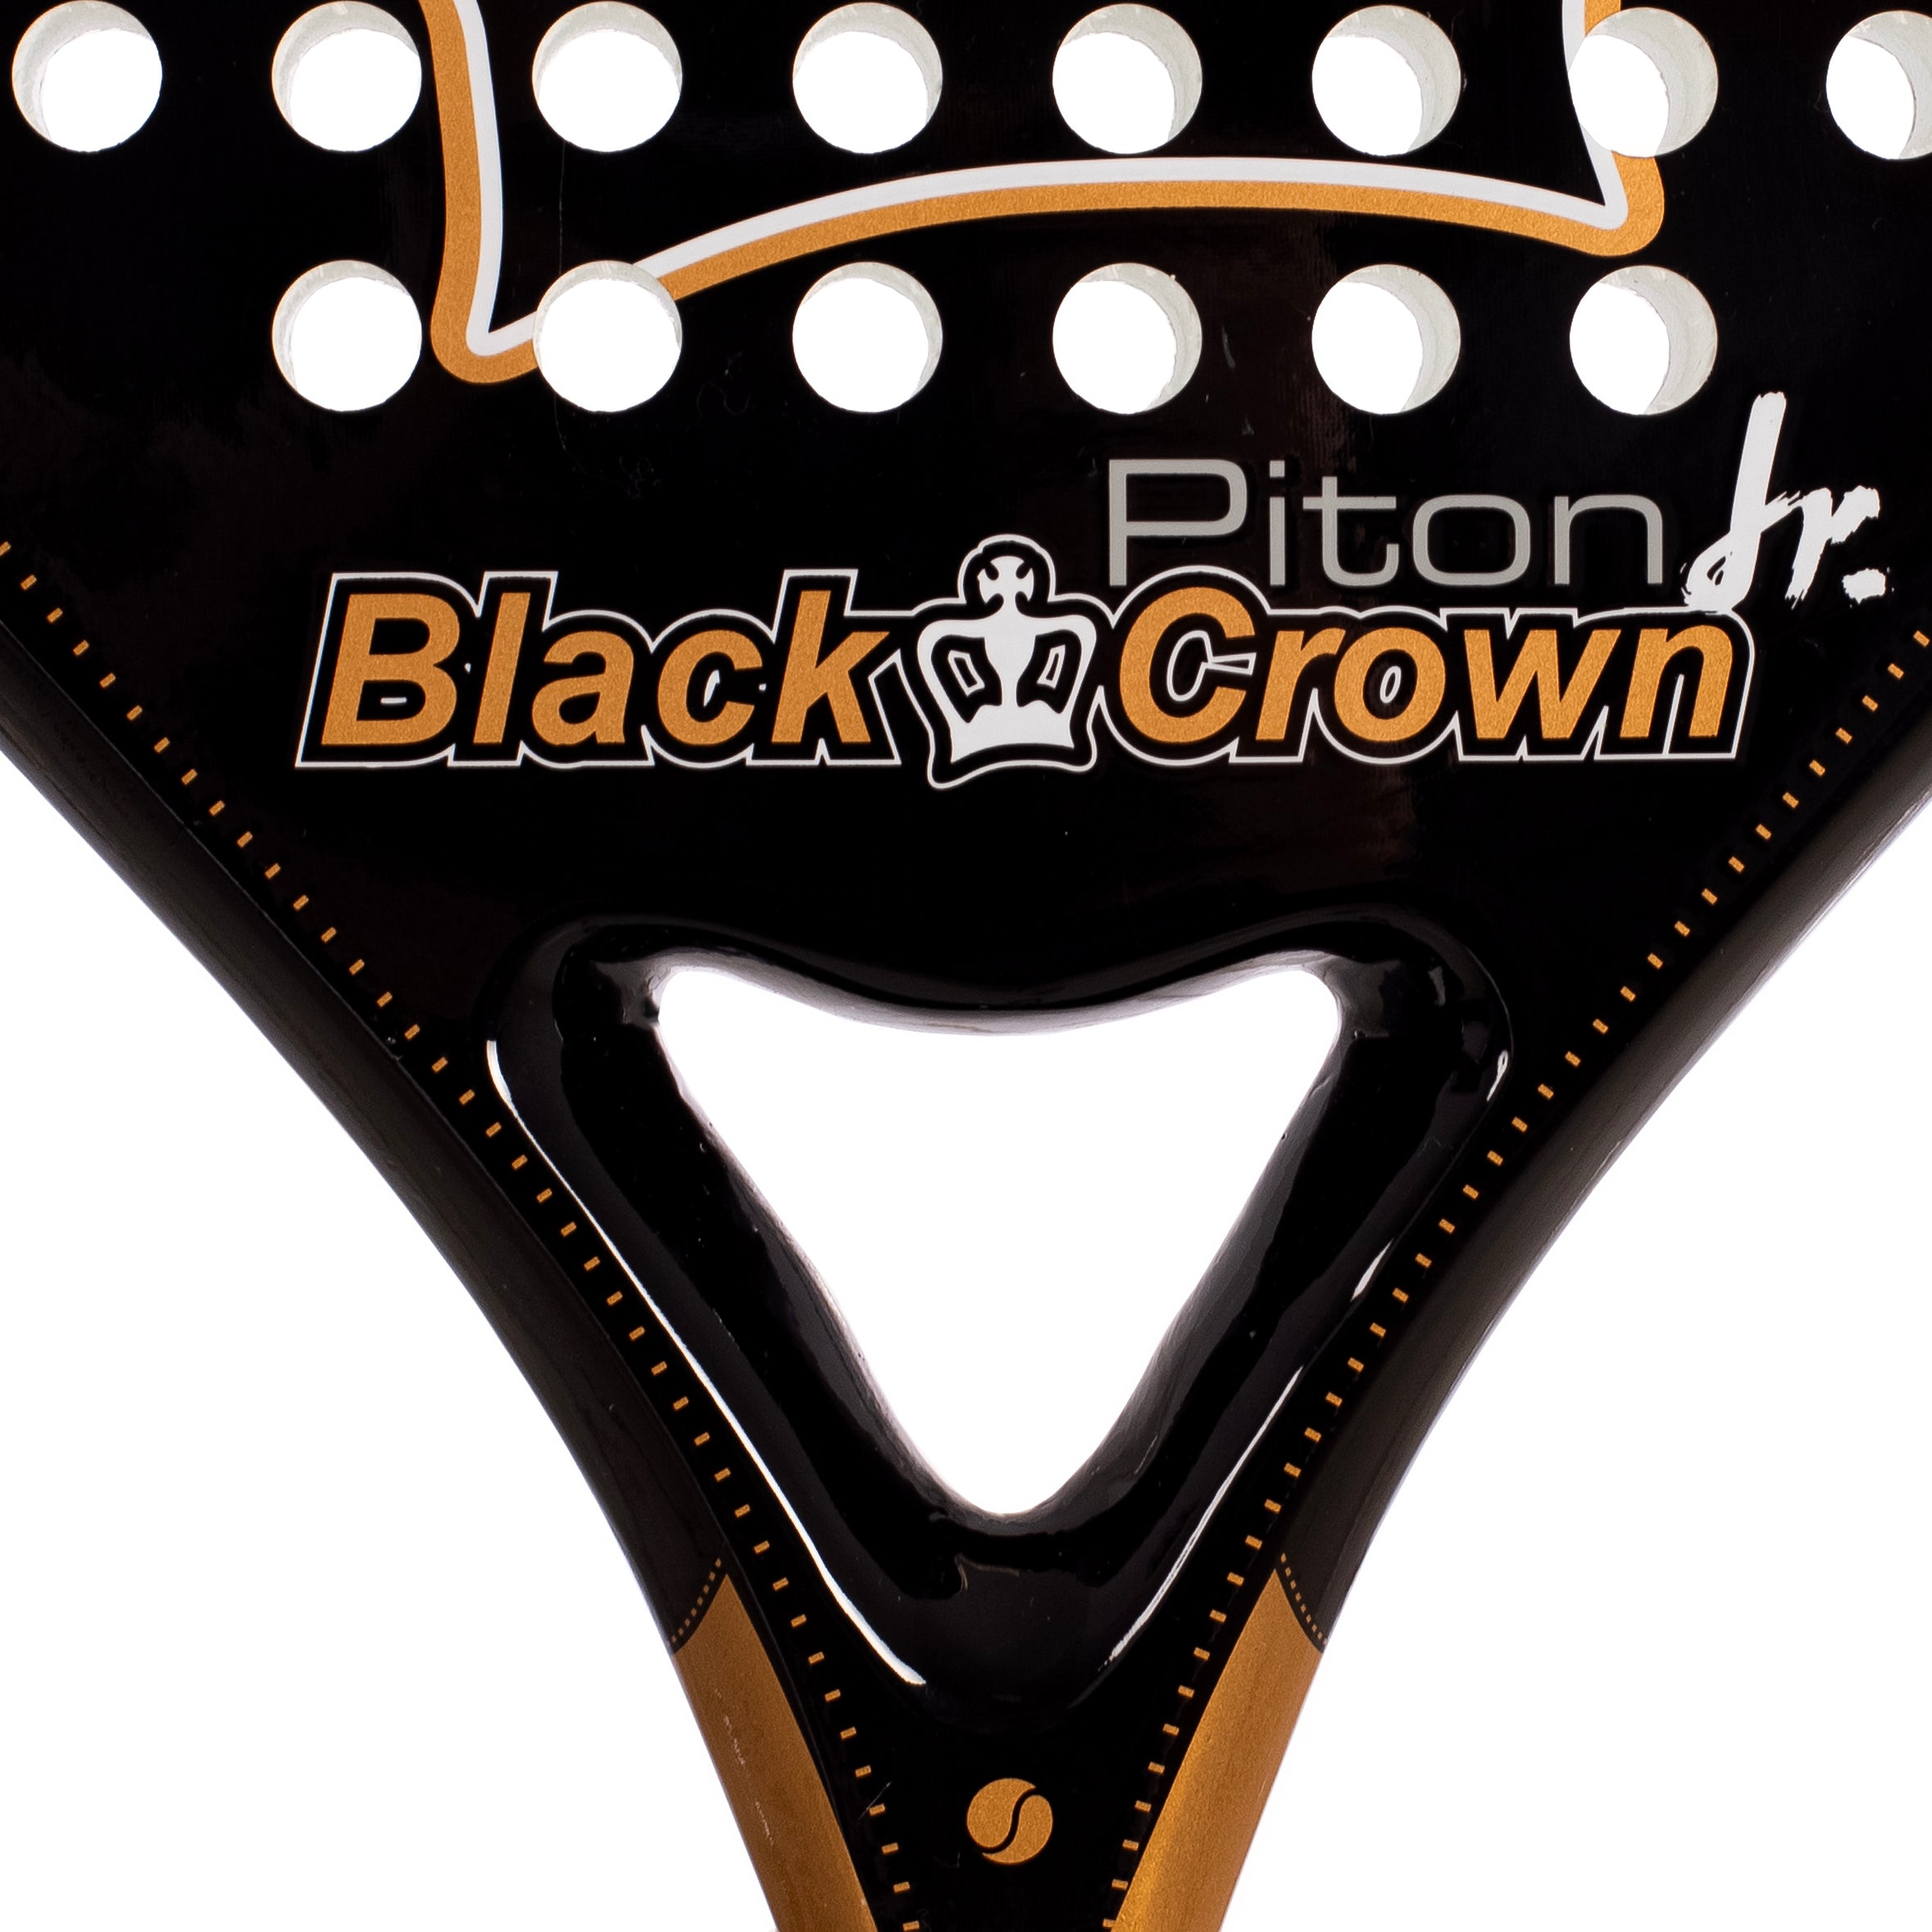 Pala Padel Black Crown Piton Junior 4